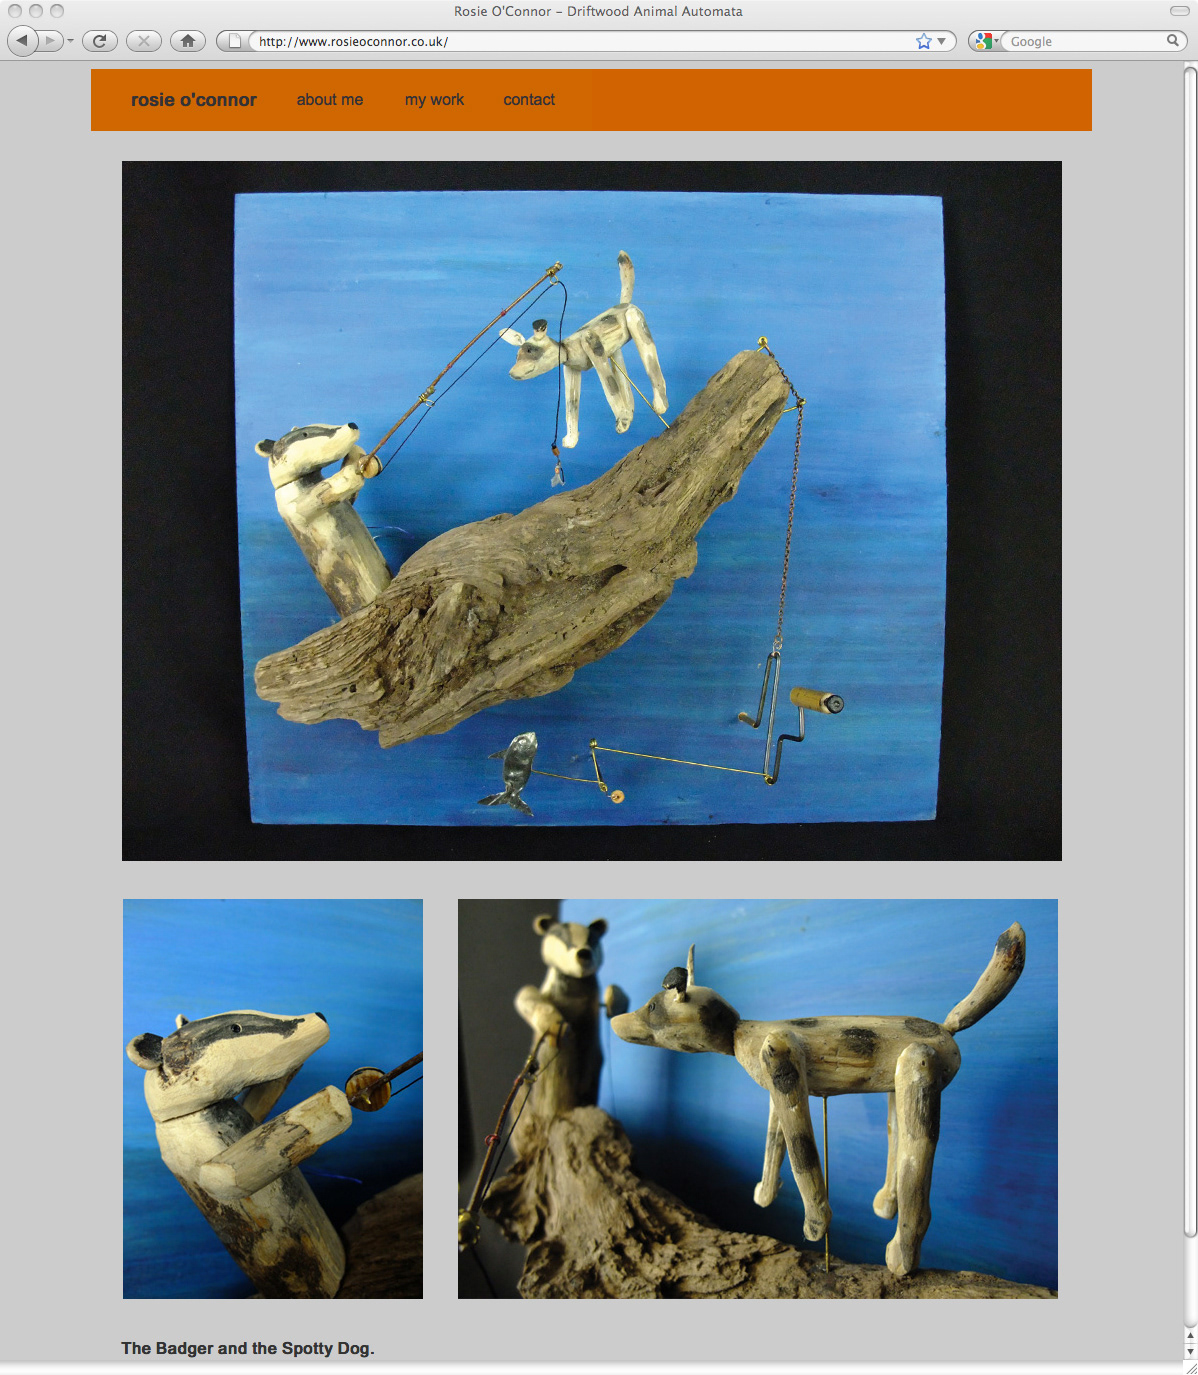 Rosie O'Connor driftwood animal automata Driftwood Animal Automata west coast scotland artist Website